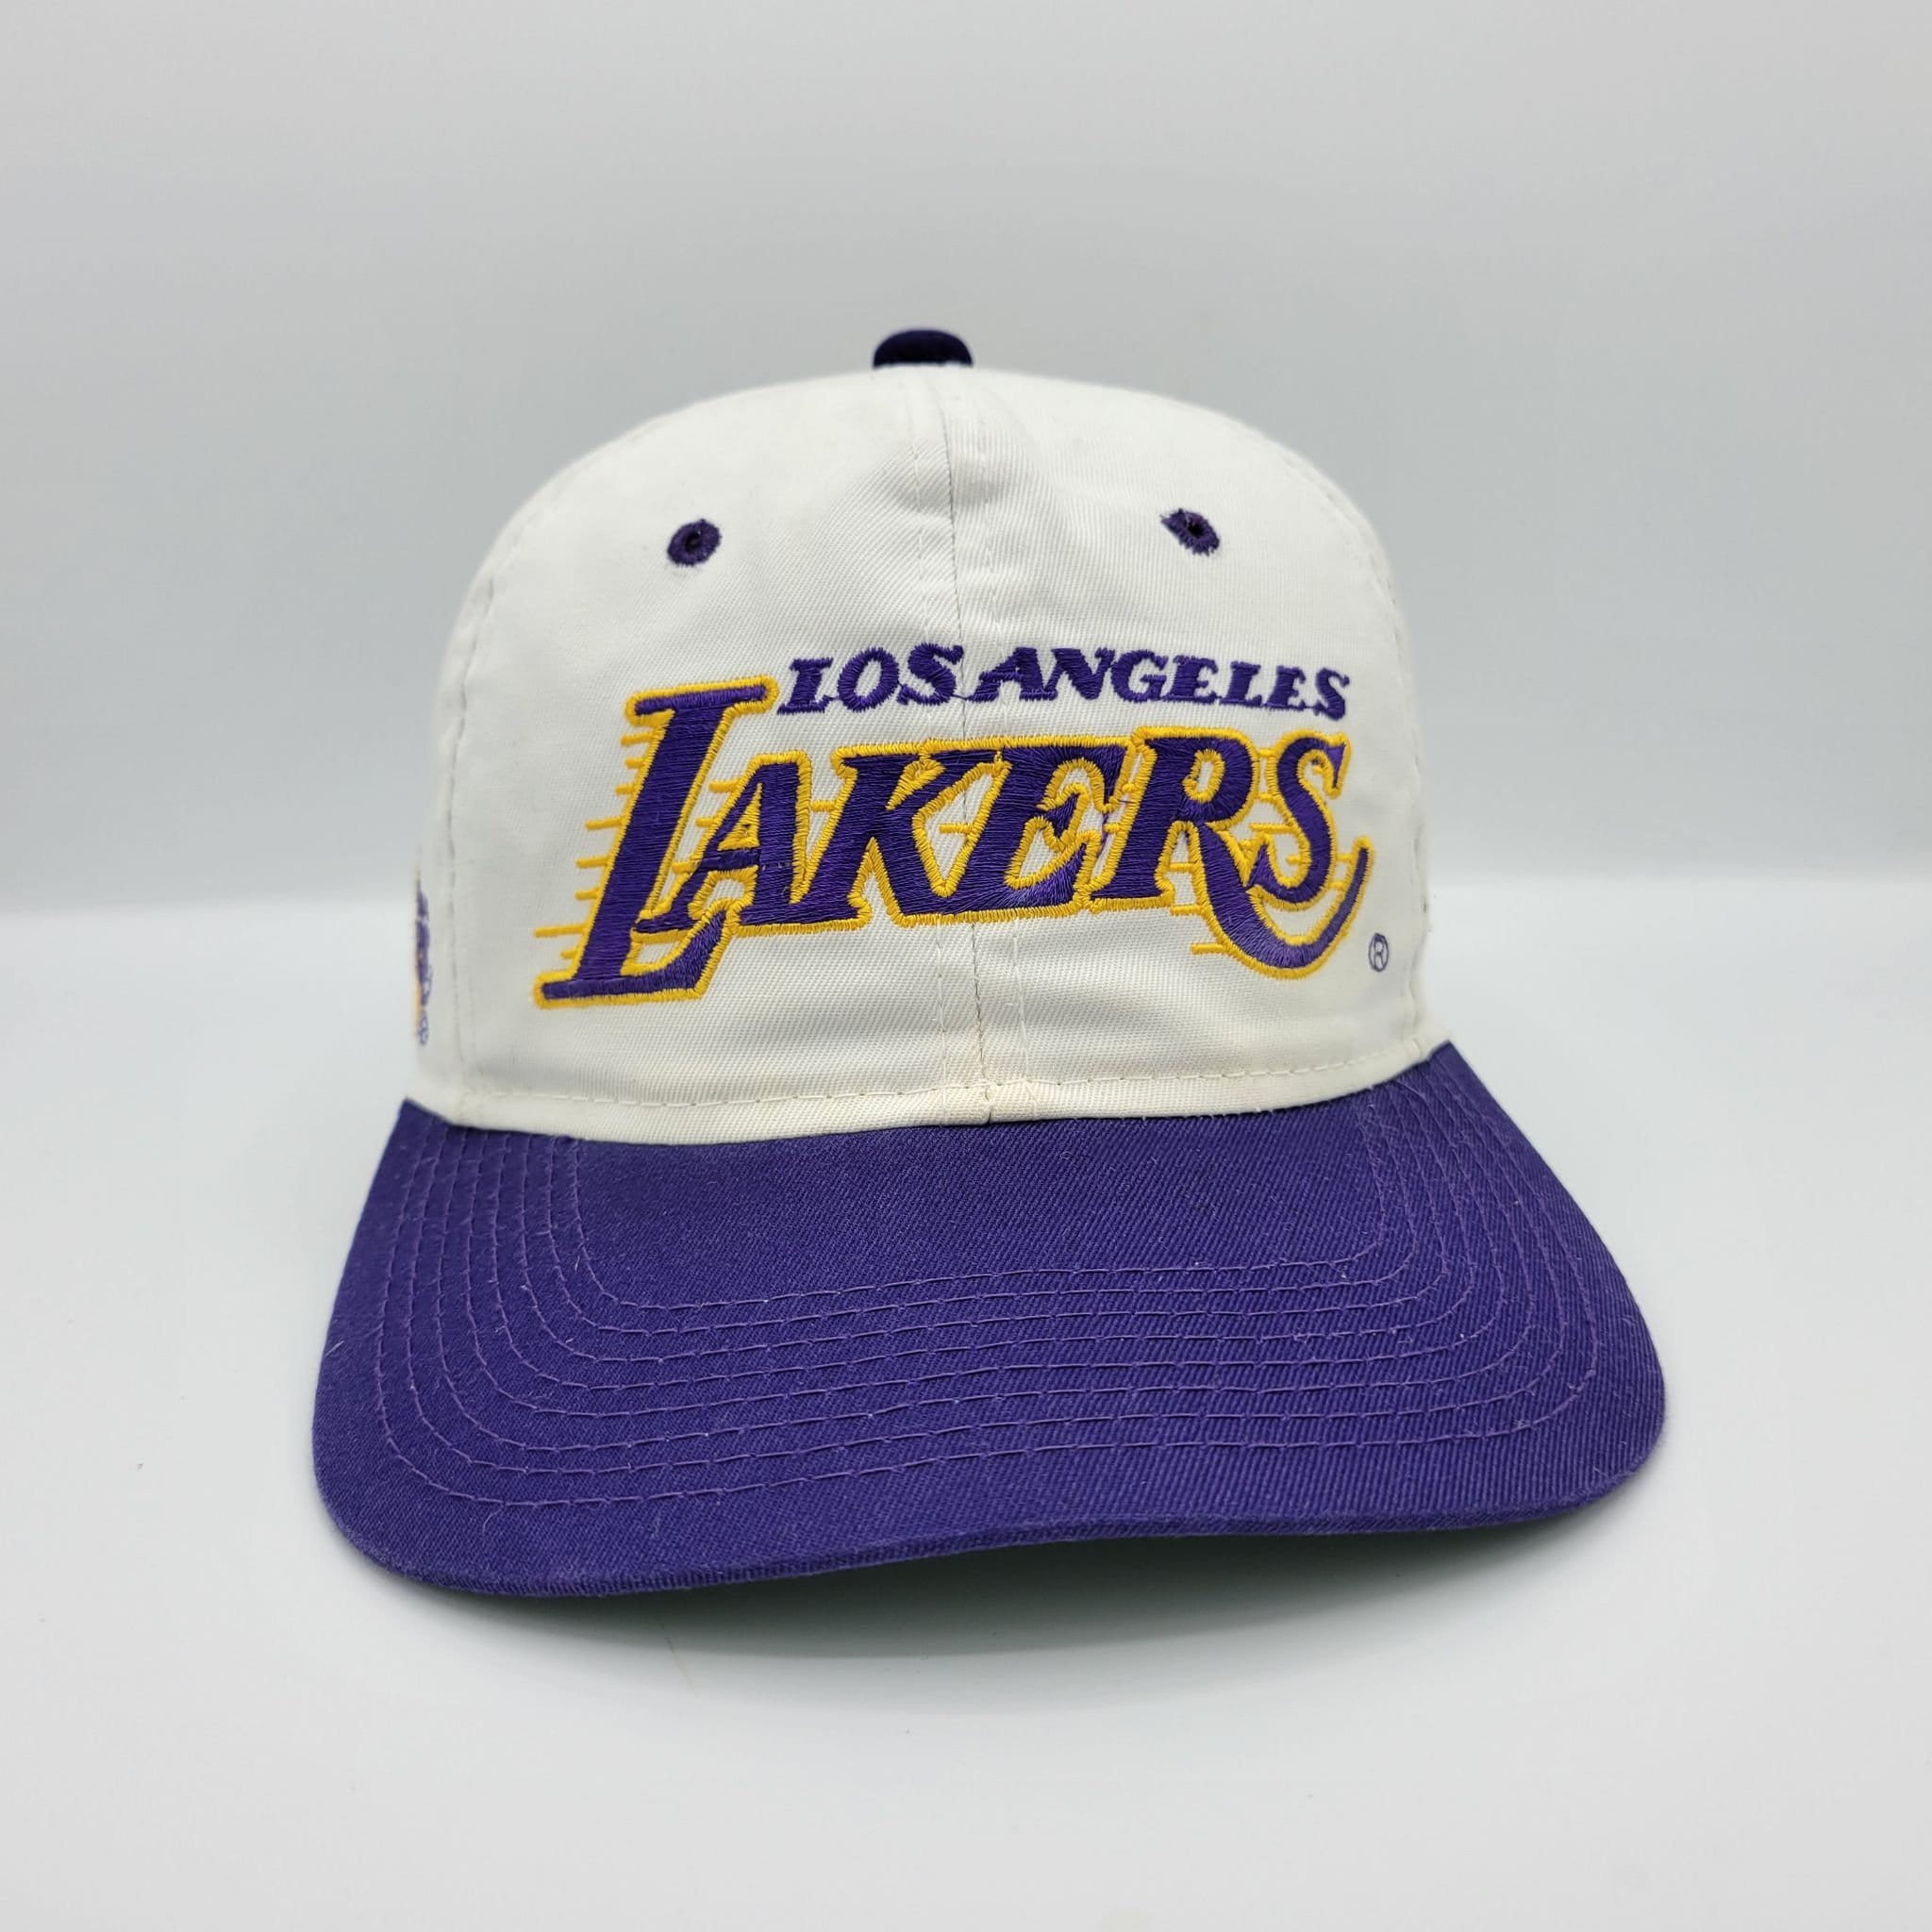 Lakers sports specialties - Gem